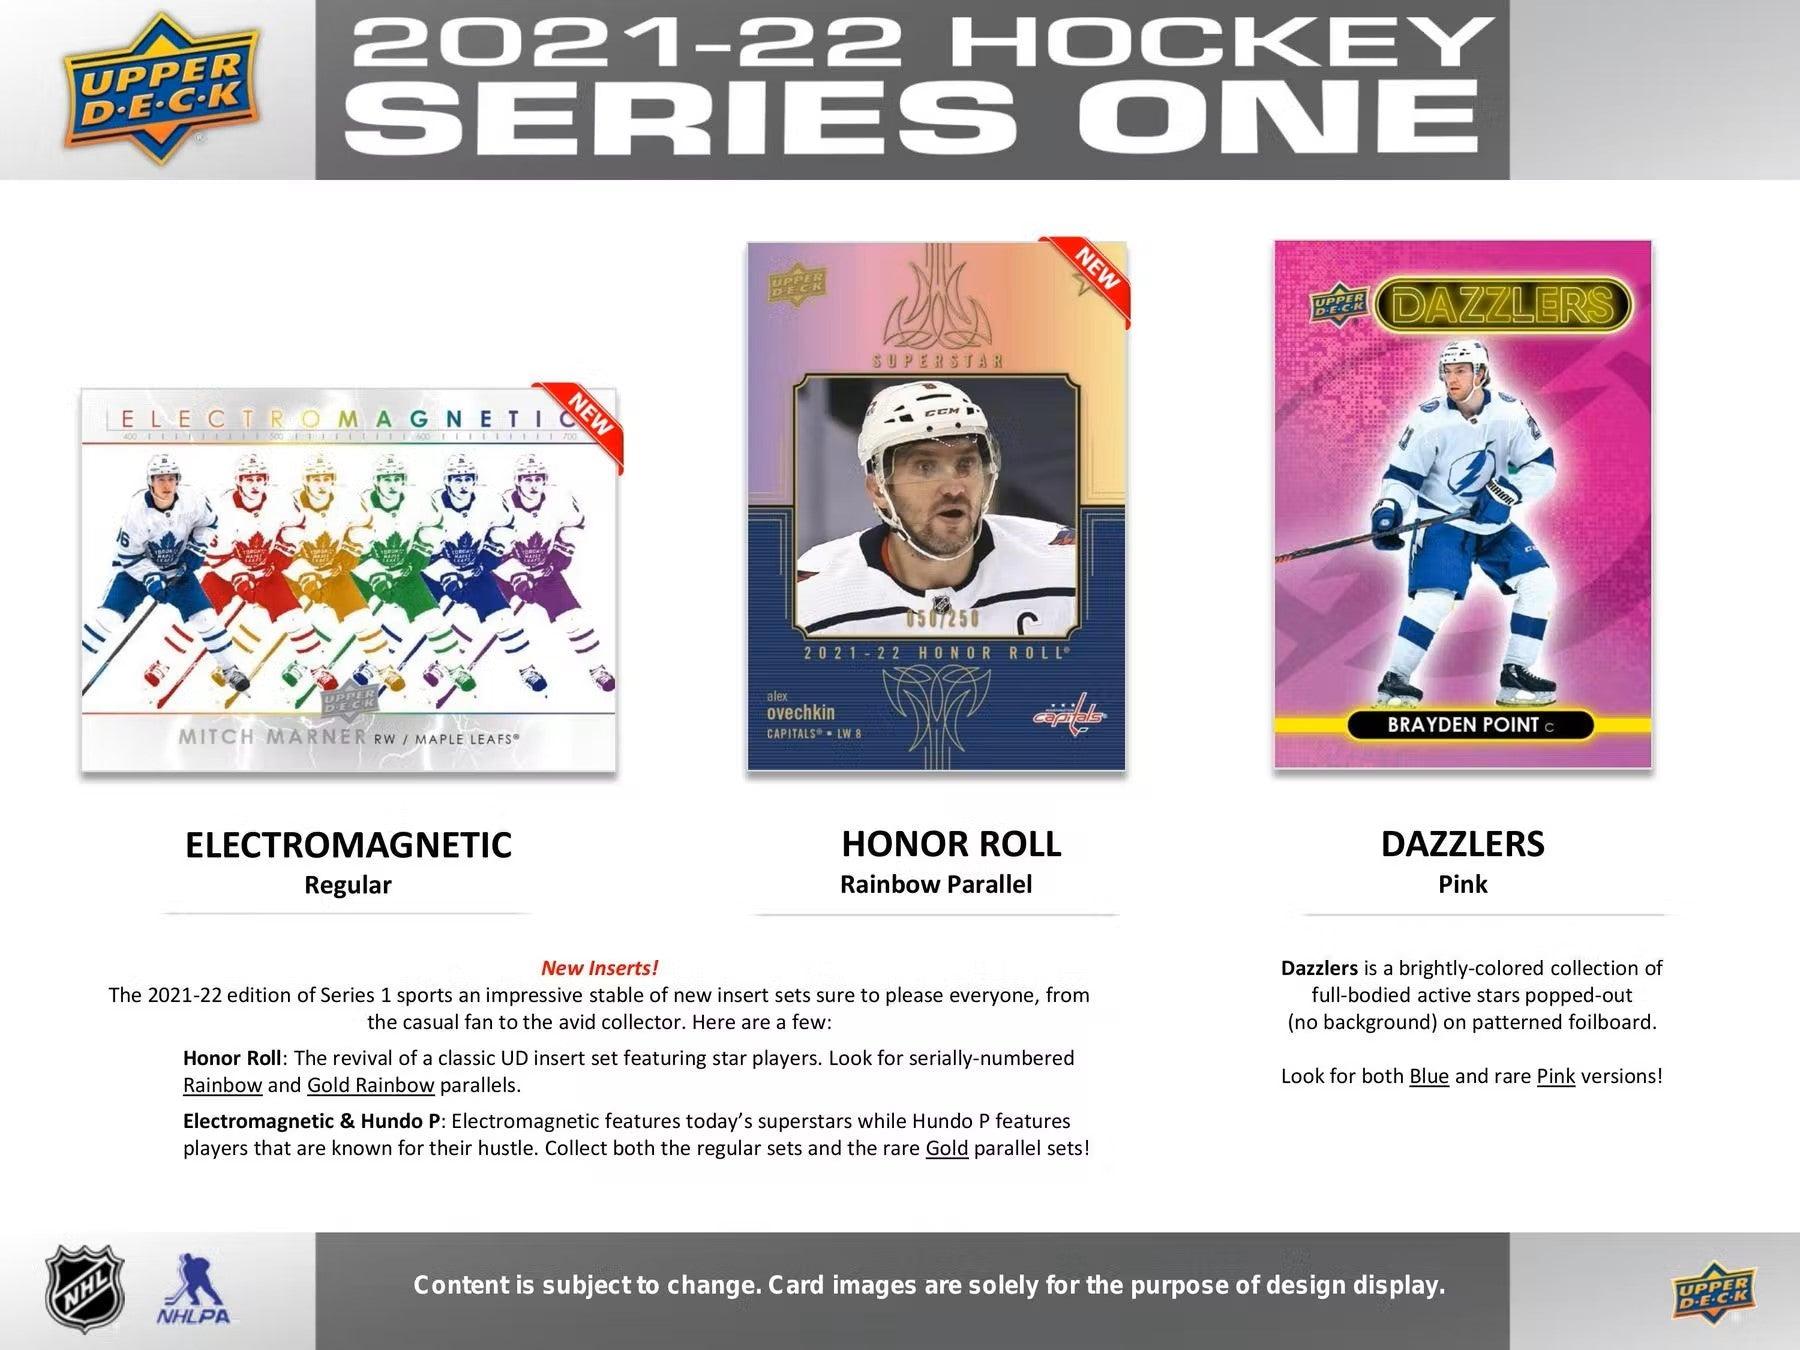 Hockey - 2021/22 - Upper Deck Series 1 - Hobby Pack (8 Cards) - Hobby Champion Inc